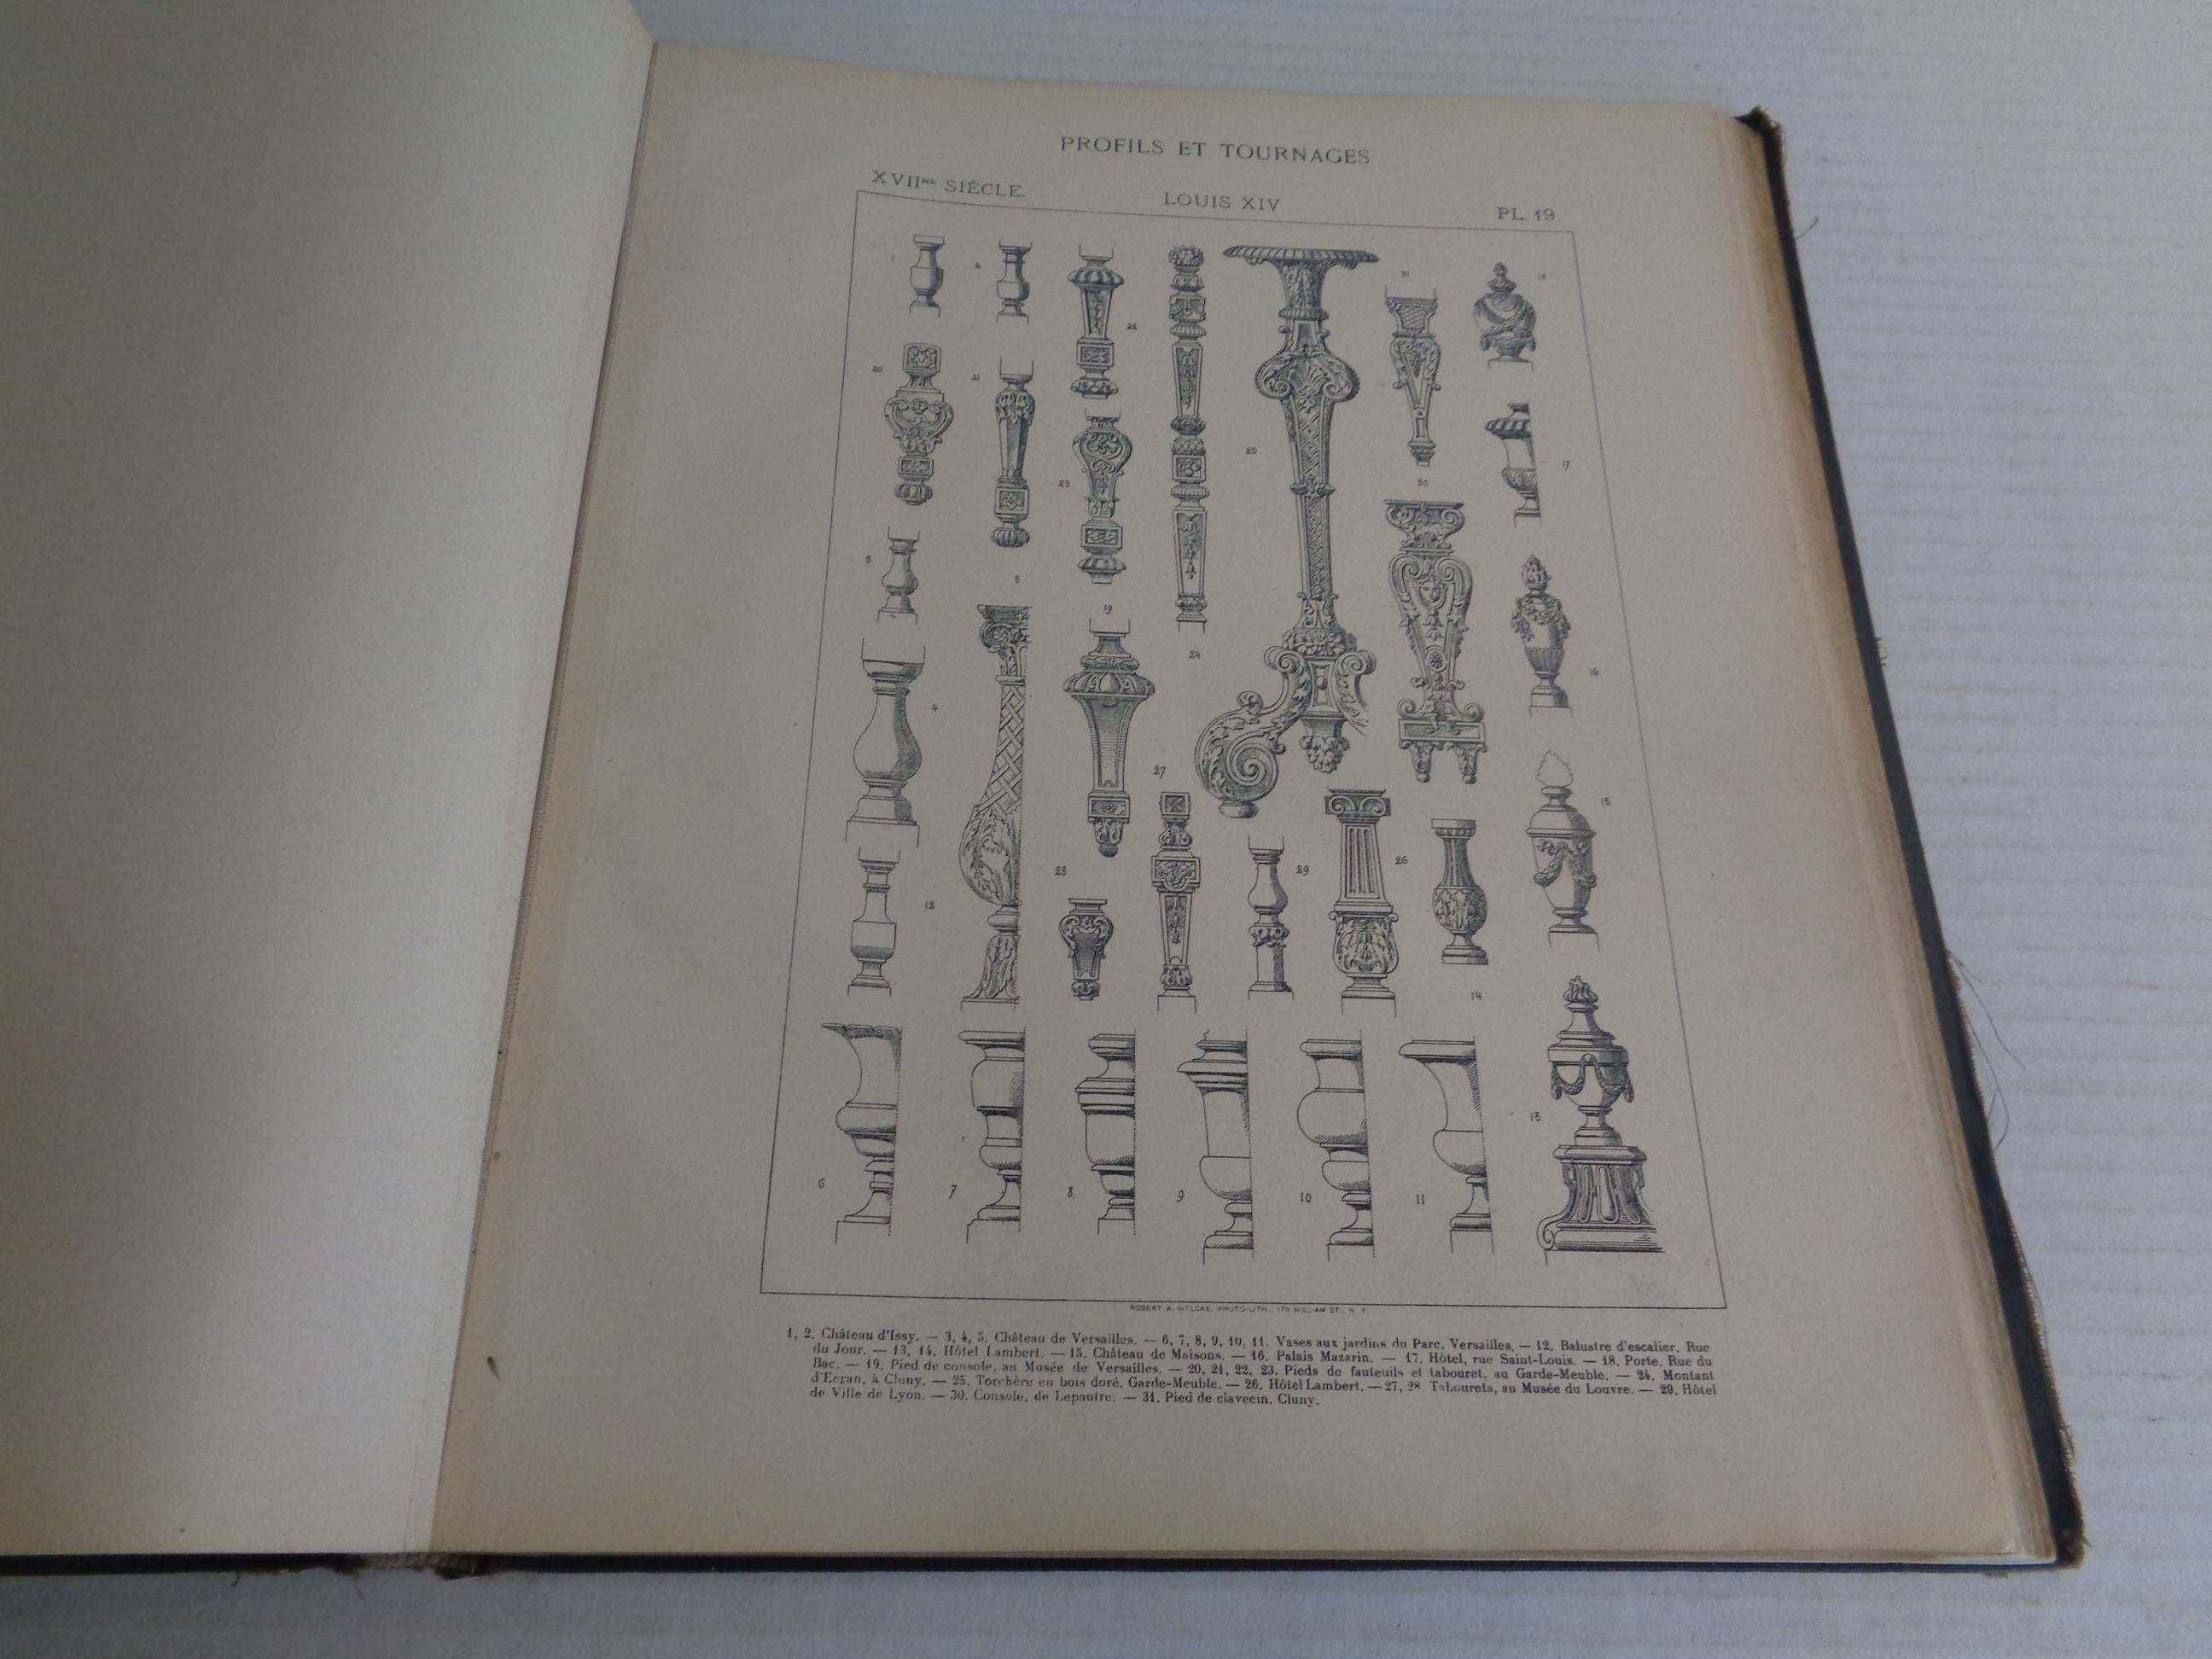  FRENCH STYLES: Furniture & Architecture - Bajot, Paris - 19th C. Folio Book For Sale 1